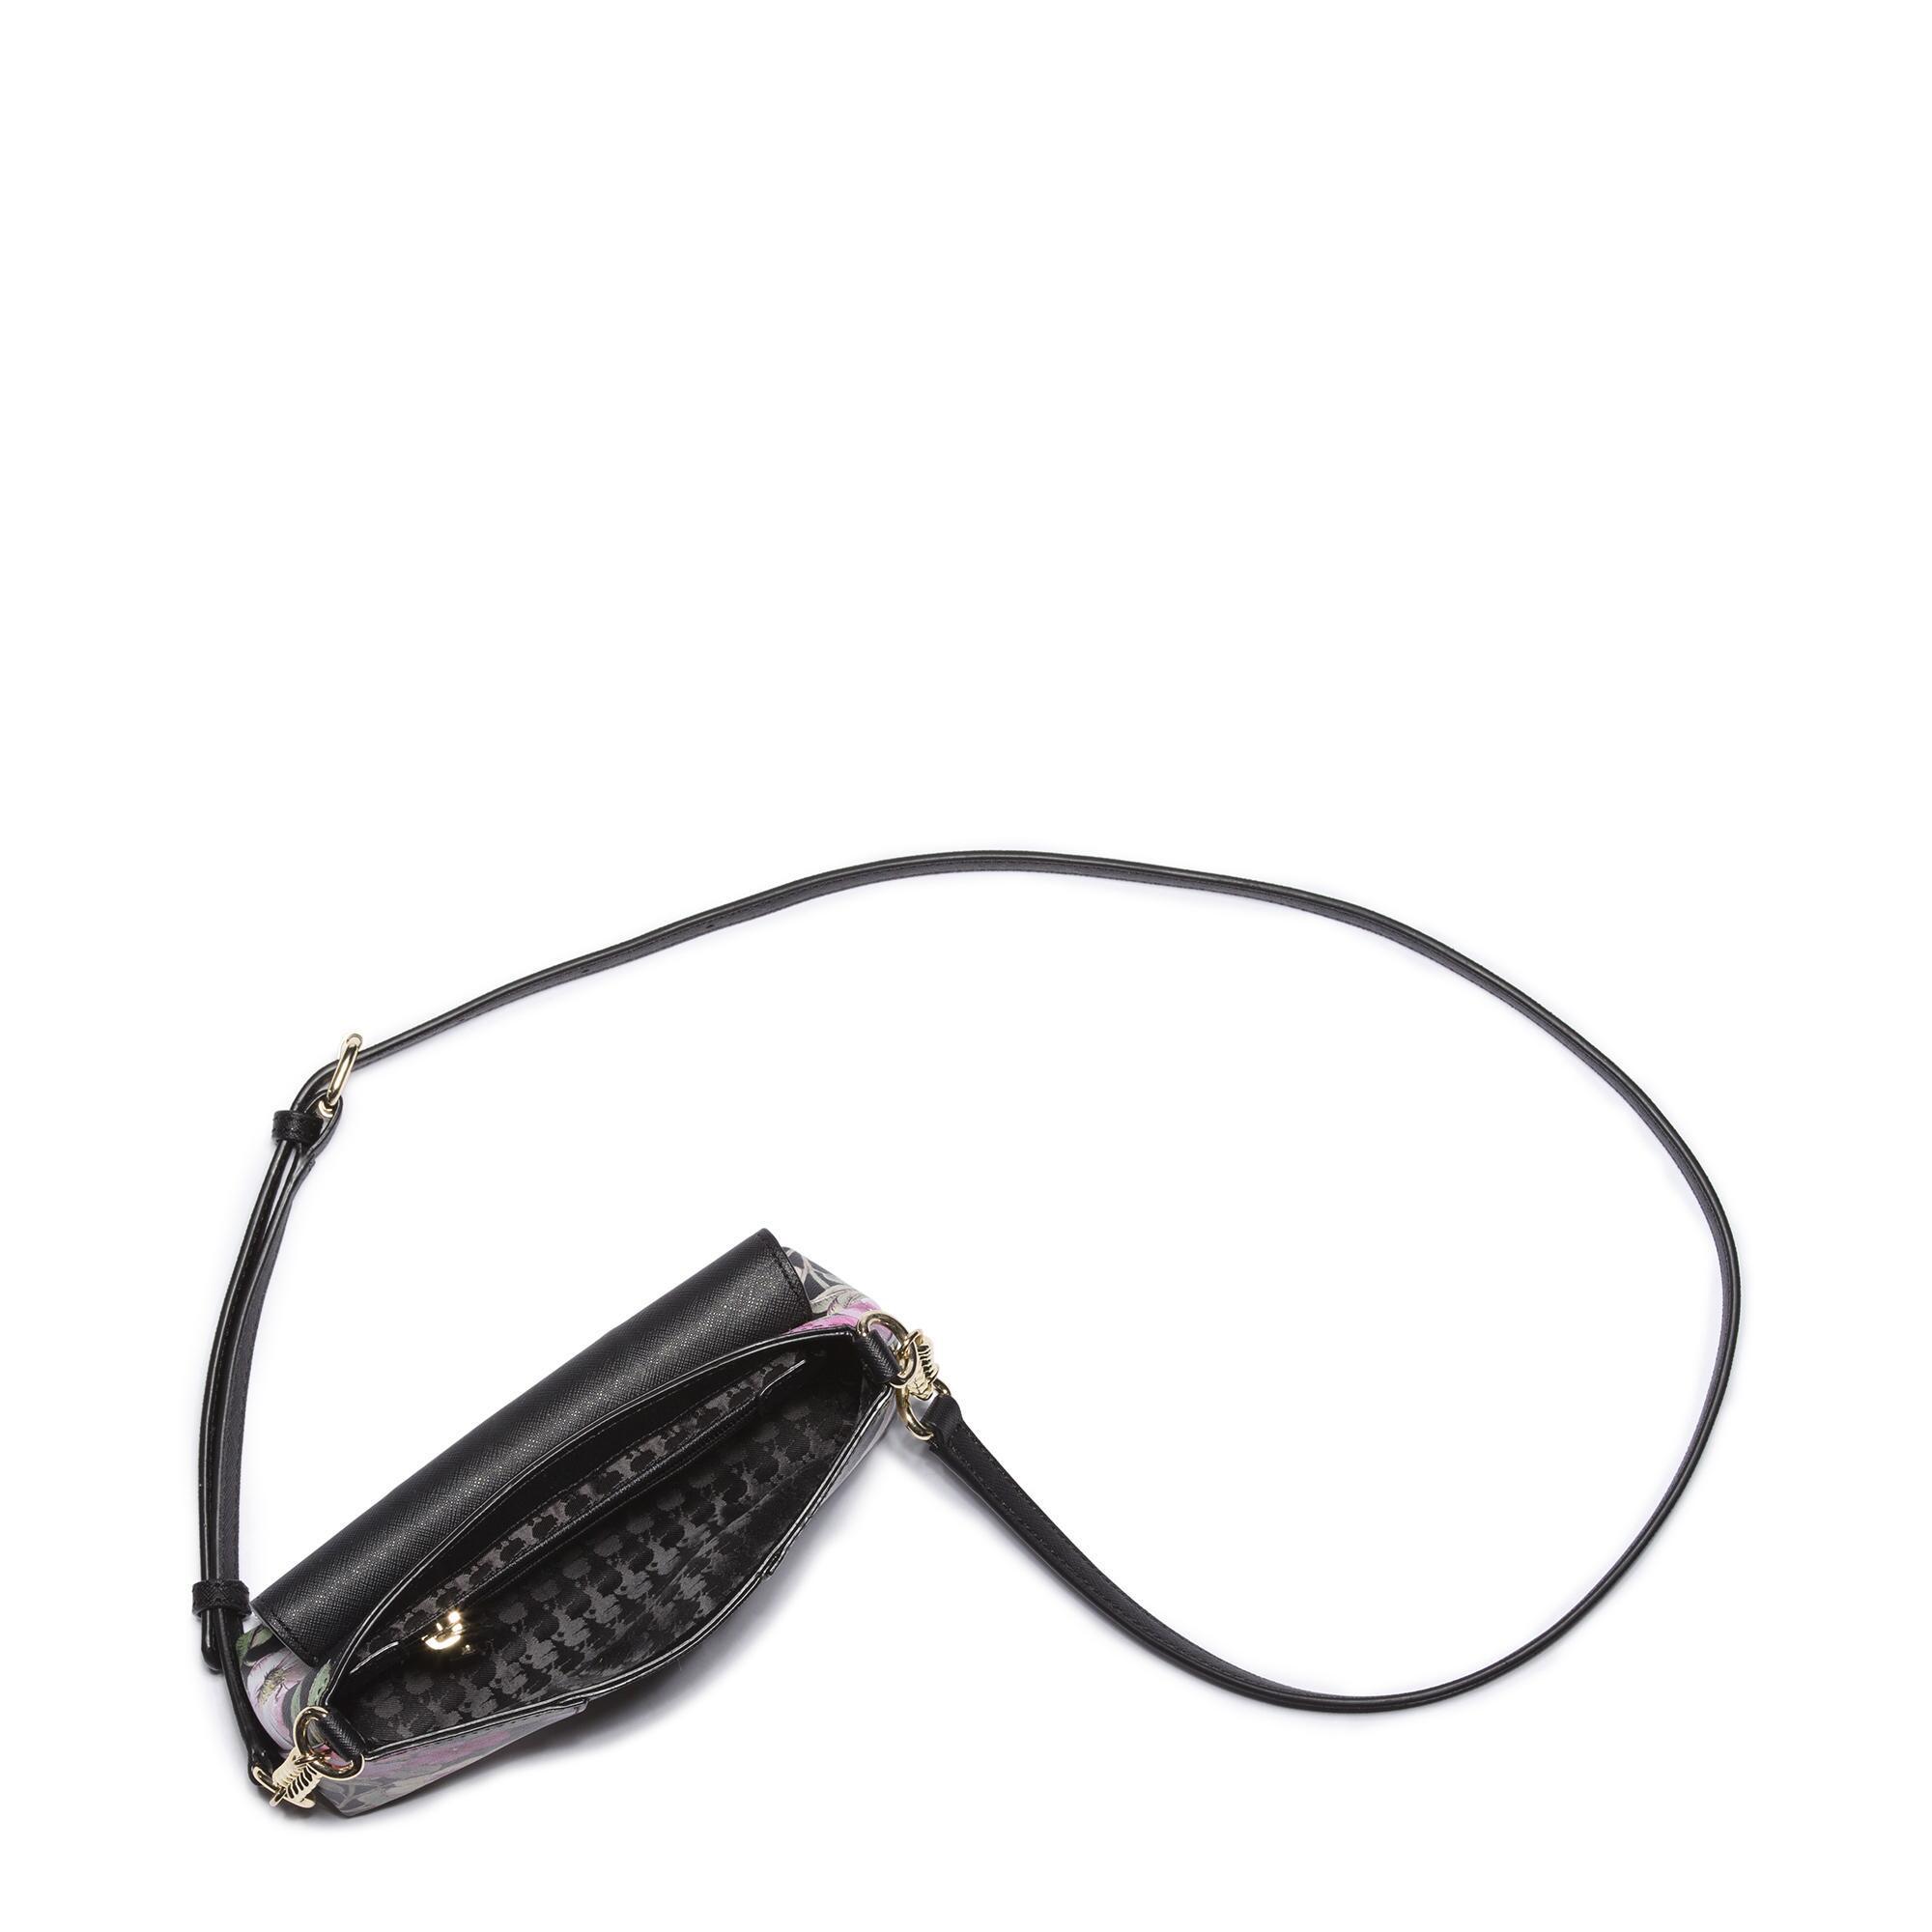 Karl Lagerfeld Paris Floral Leather Crossbody Bag in Black - Lyst